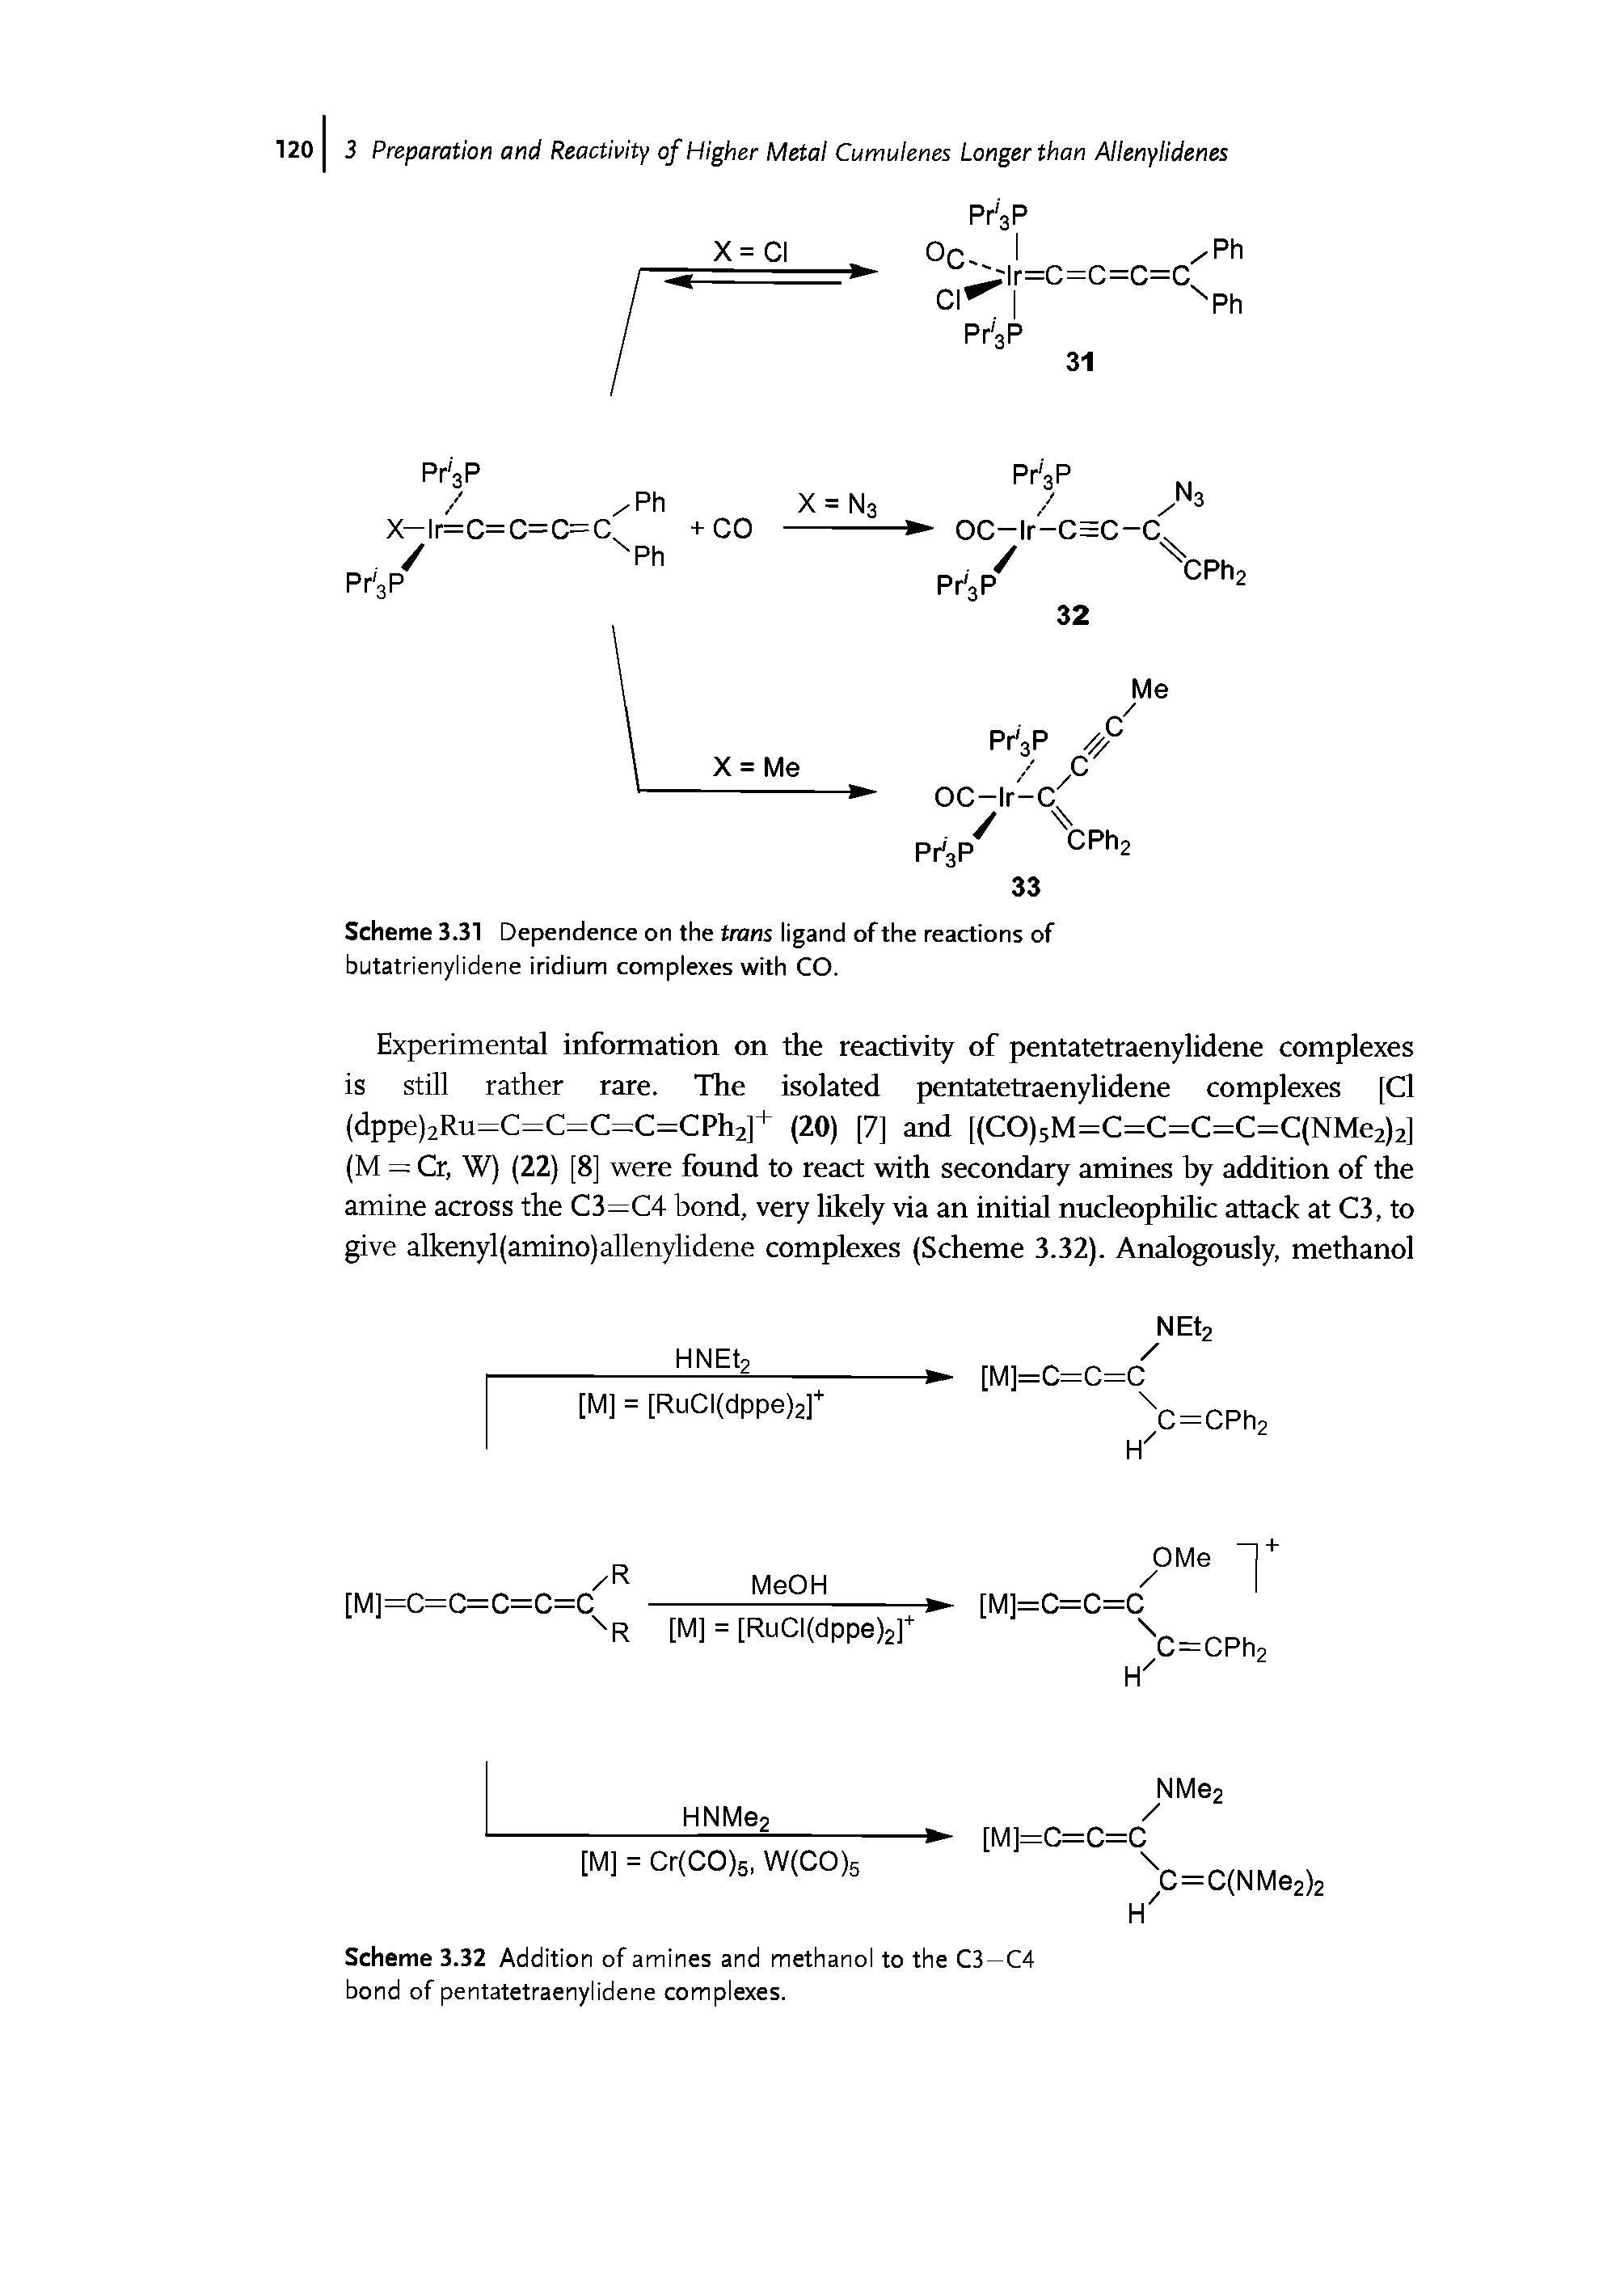 Scheme 3.32 Addition of amines and methanol to the C3—C4 bond of pentatetraenylidene complexes.